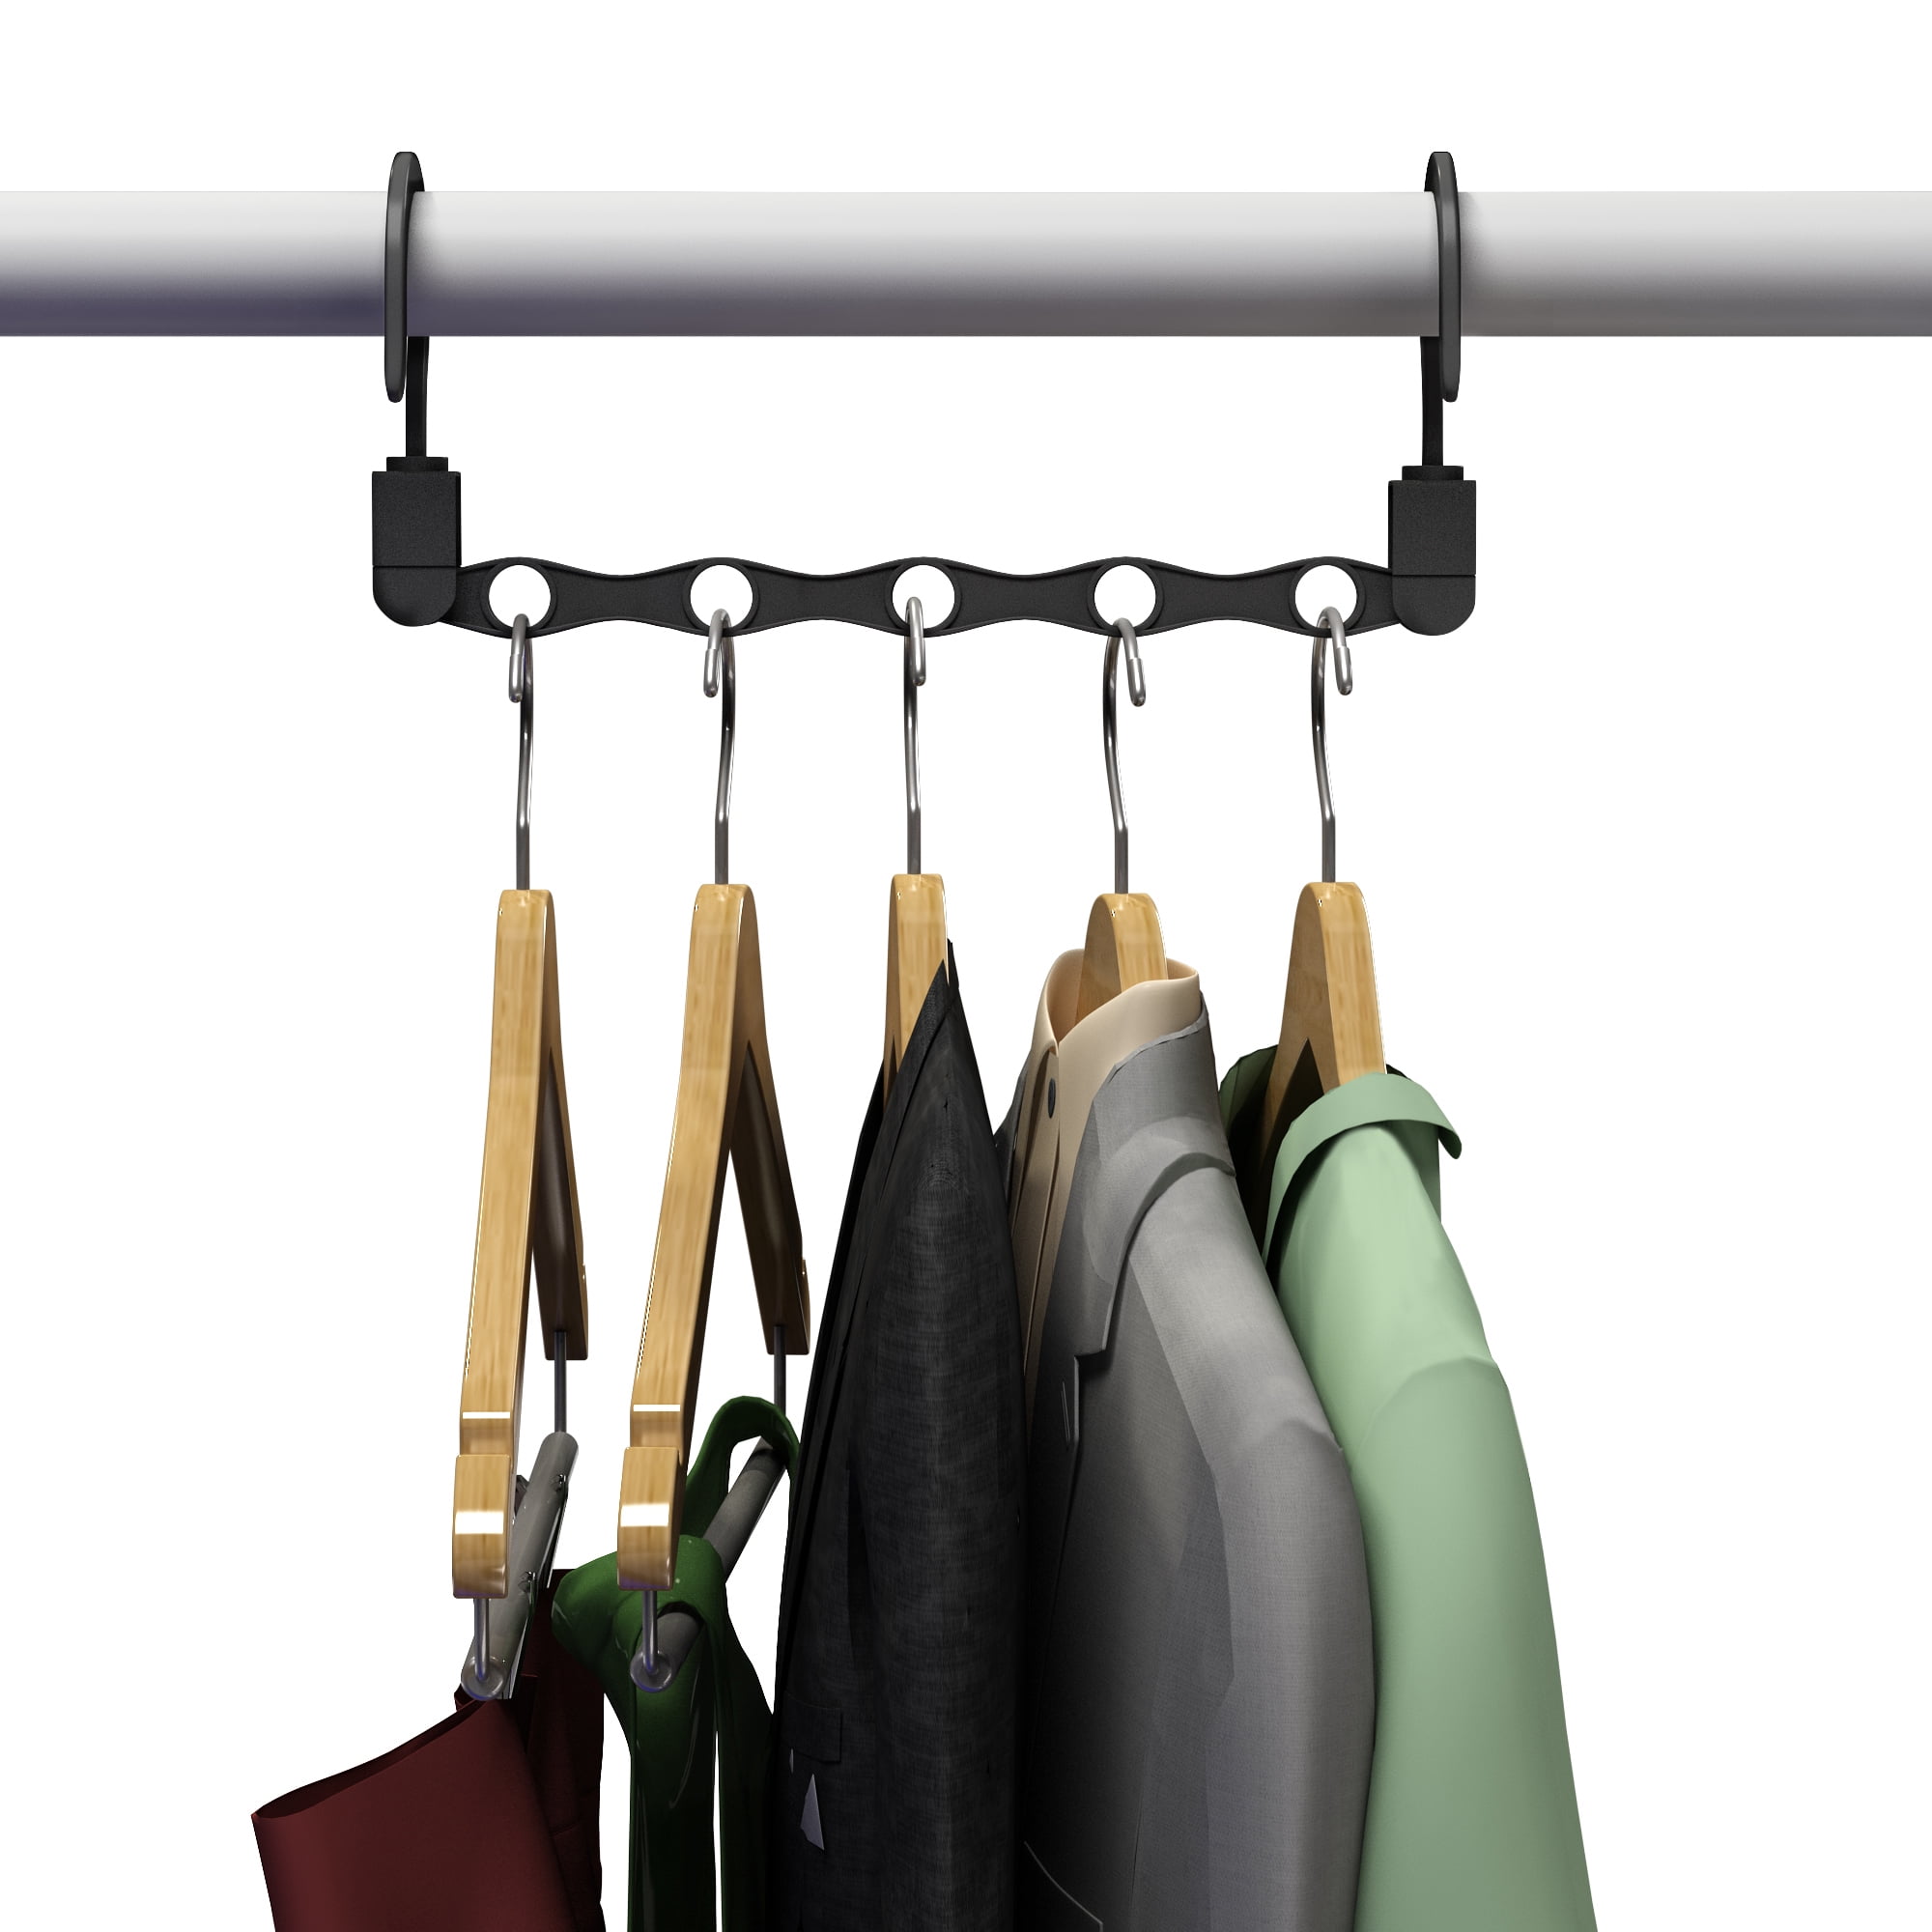 Hanger Wood Space Saver Clothing Closet Organizer Suit Hangers Maple Set of 10 